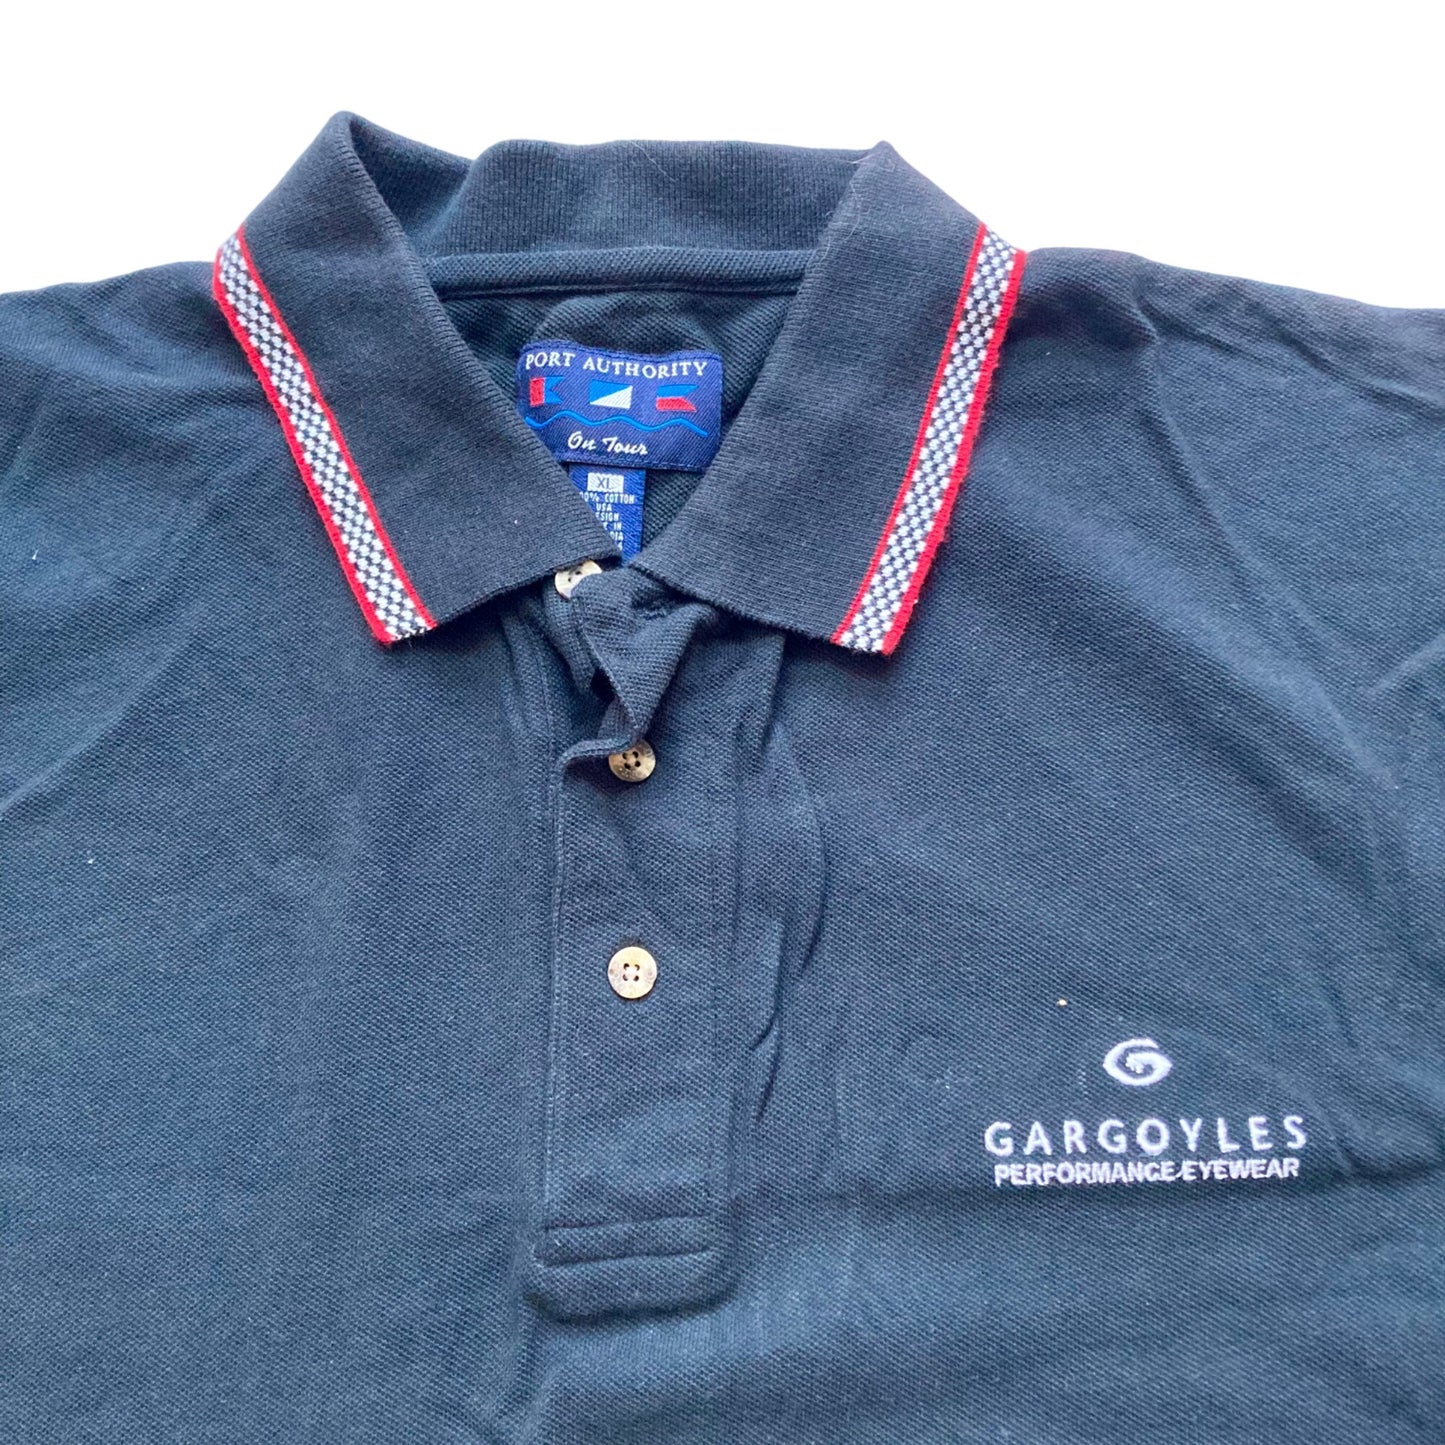 Vintage Gargoyles Performance Eyewear Polo Shirt NASCAR Daytona Sponsor 1997 XL